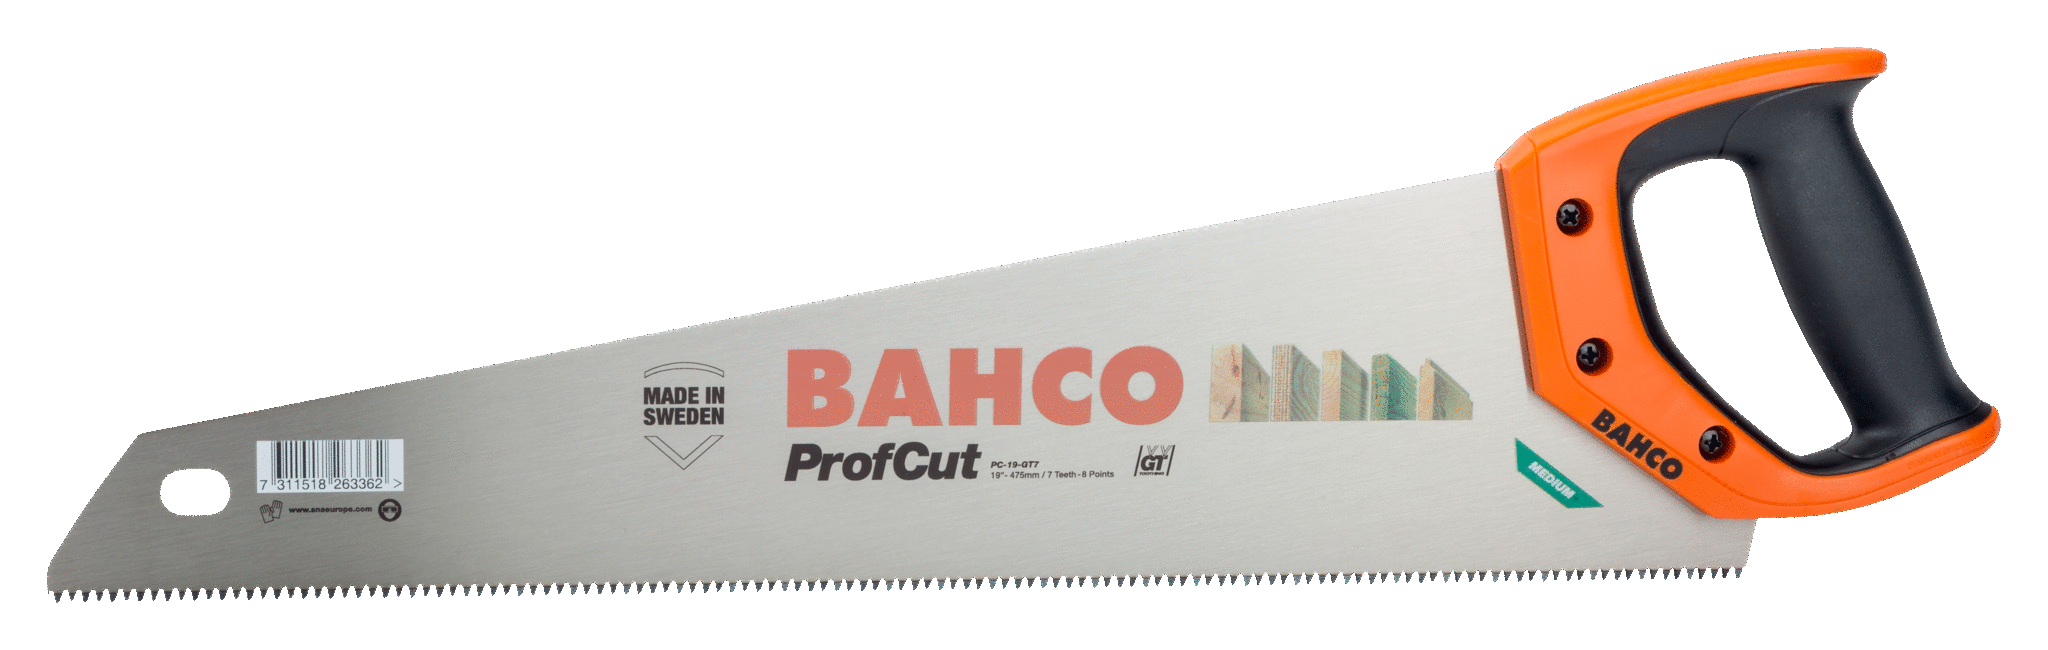 Ruční pila BAHCO ProfCut PC-19-GT7